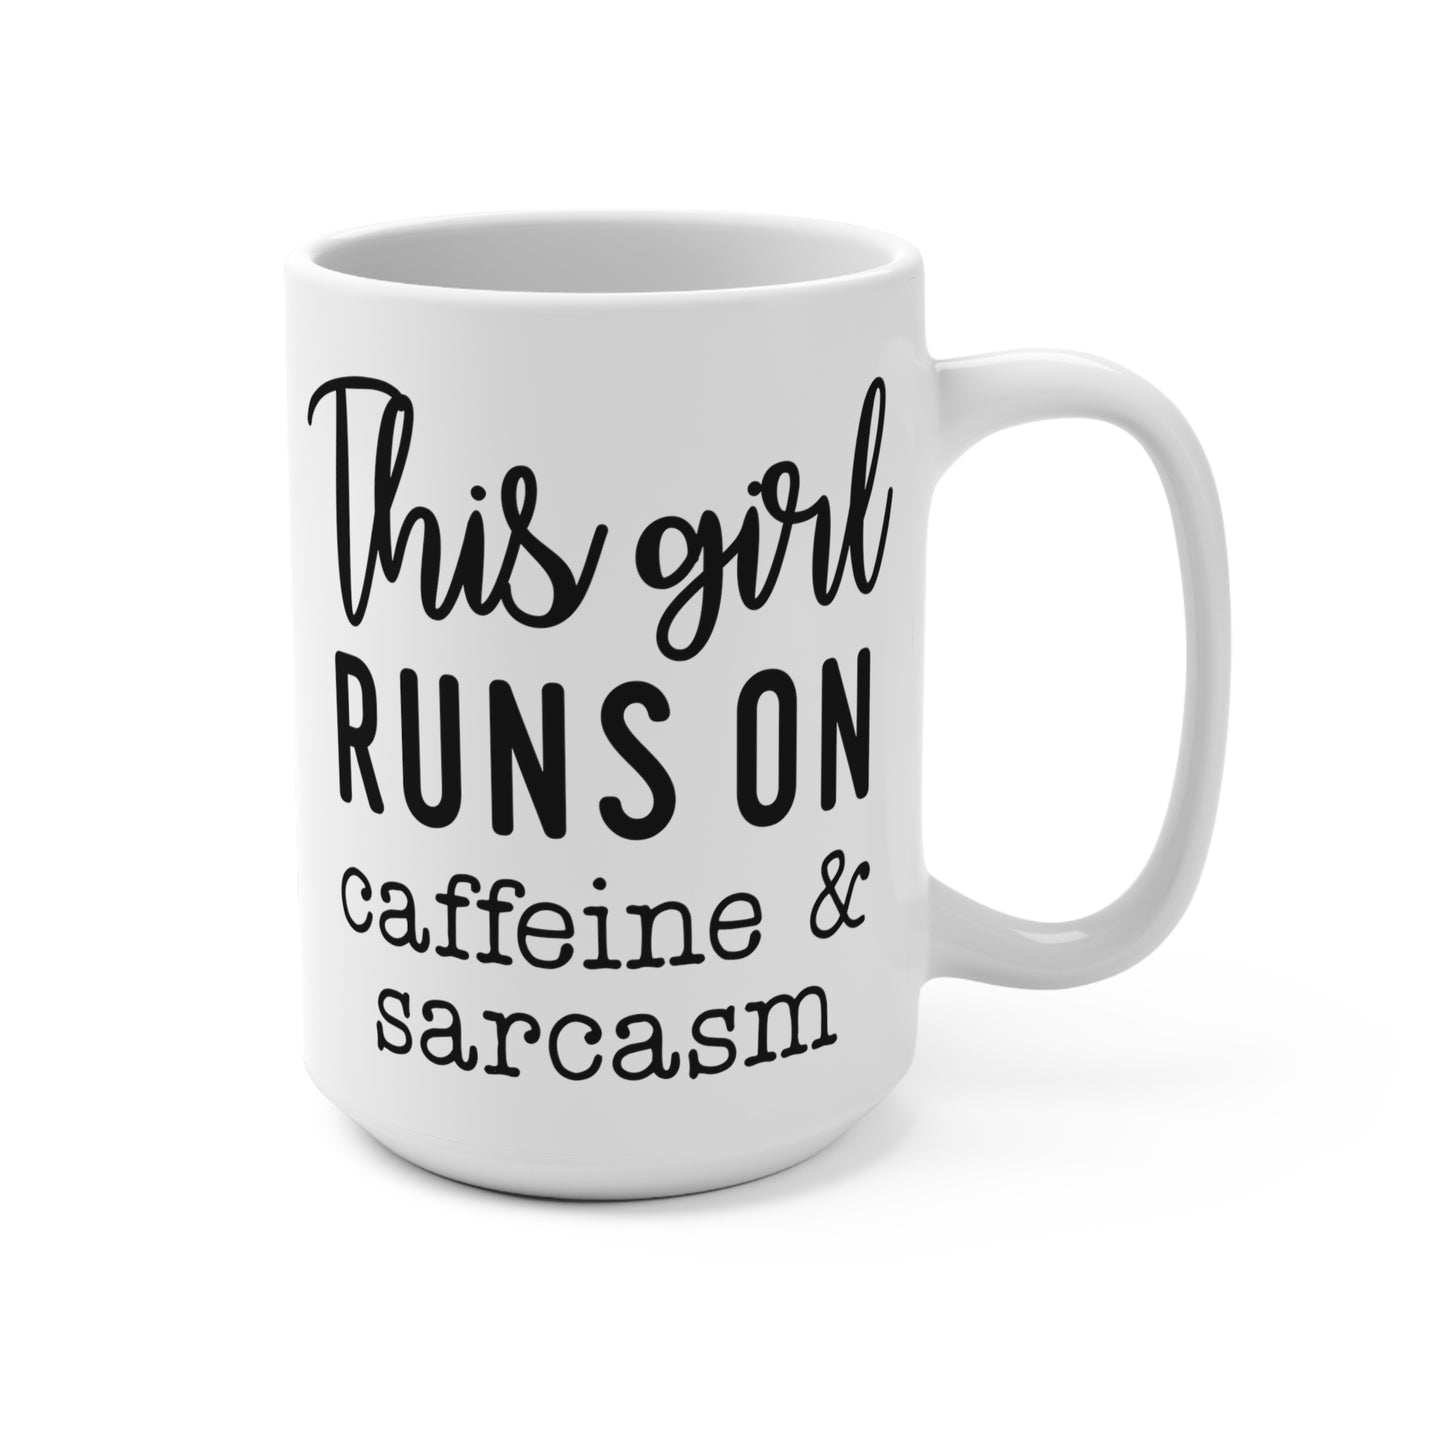 This Girl Runs on Caffeine and Sarcasm Mug, Funny Quote Coffee Cup, Gift for Her, Sarcastic Office Mug, Humor Tea Mug, Girlfriend Gift, Sarcastic Drinkware